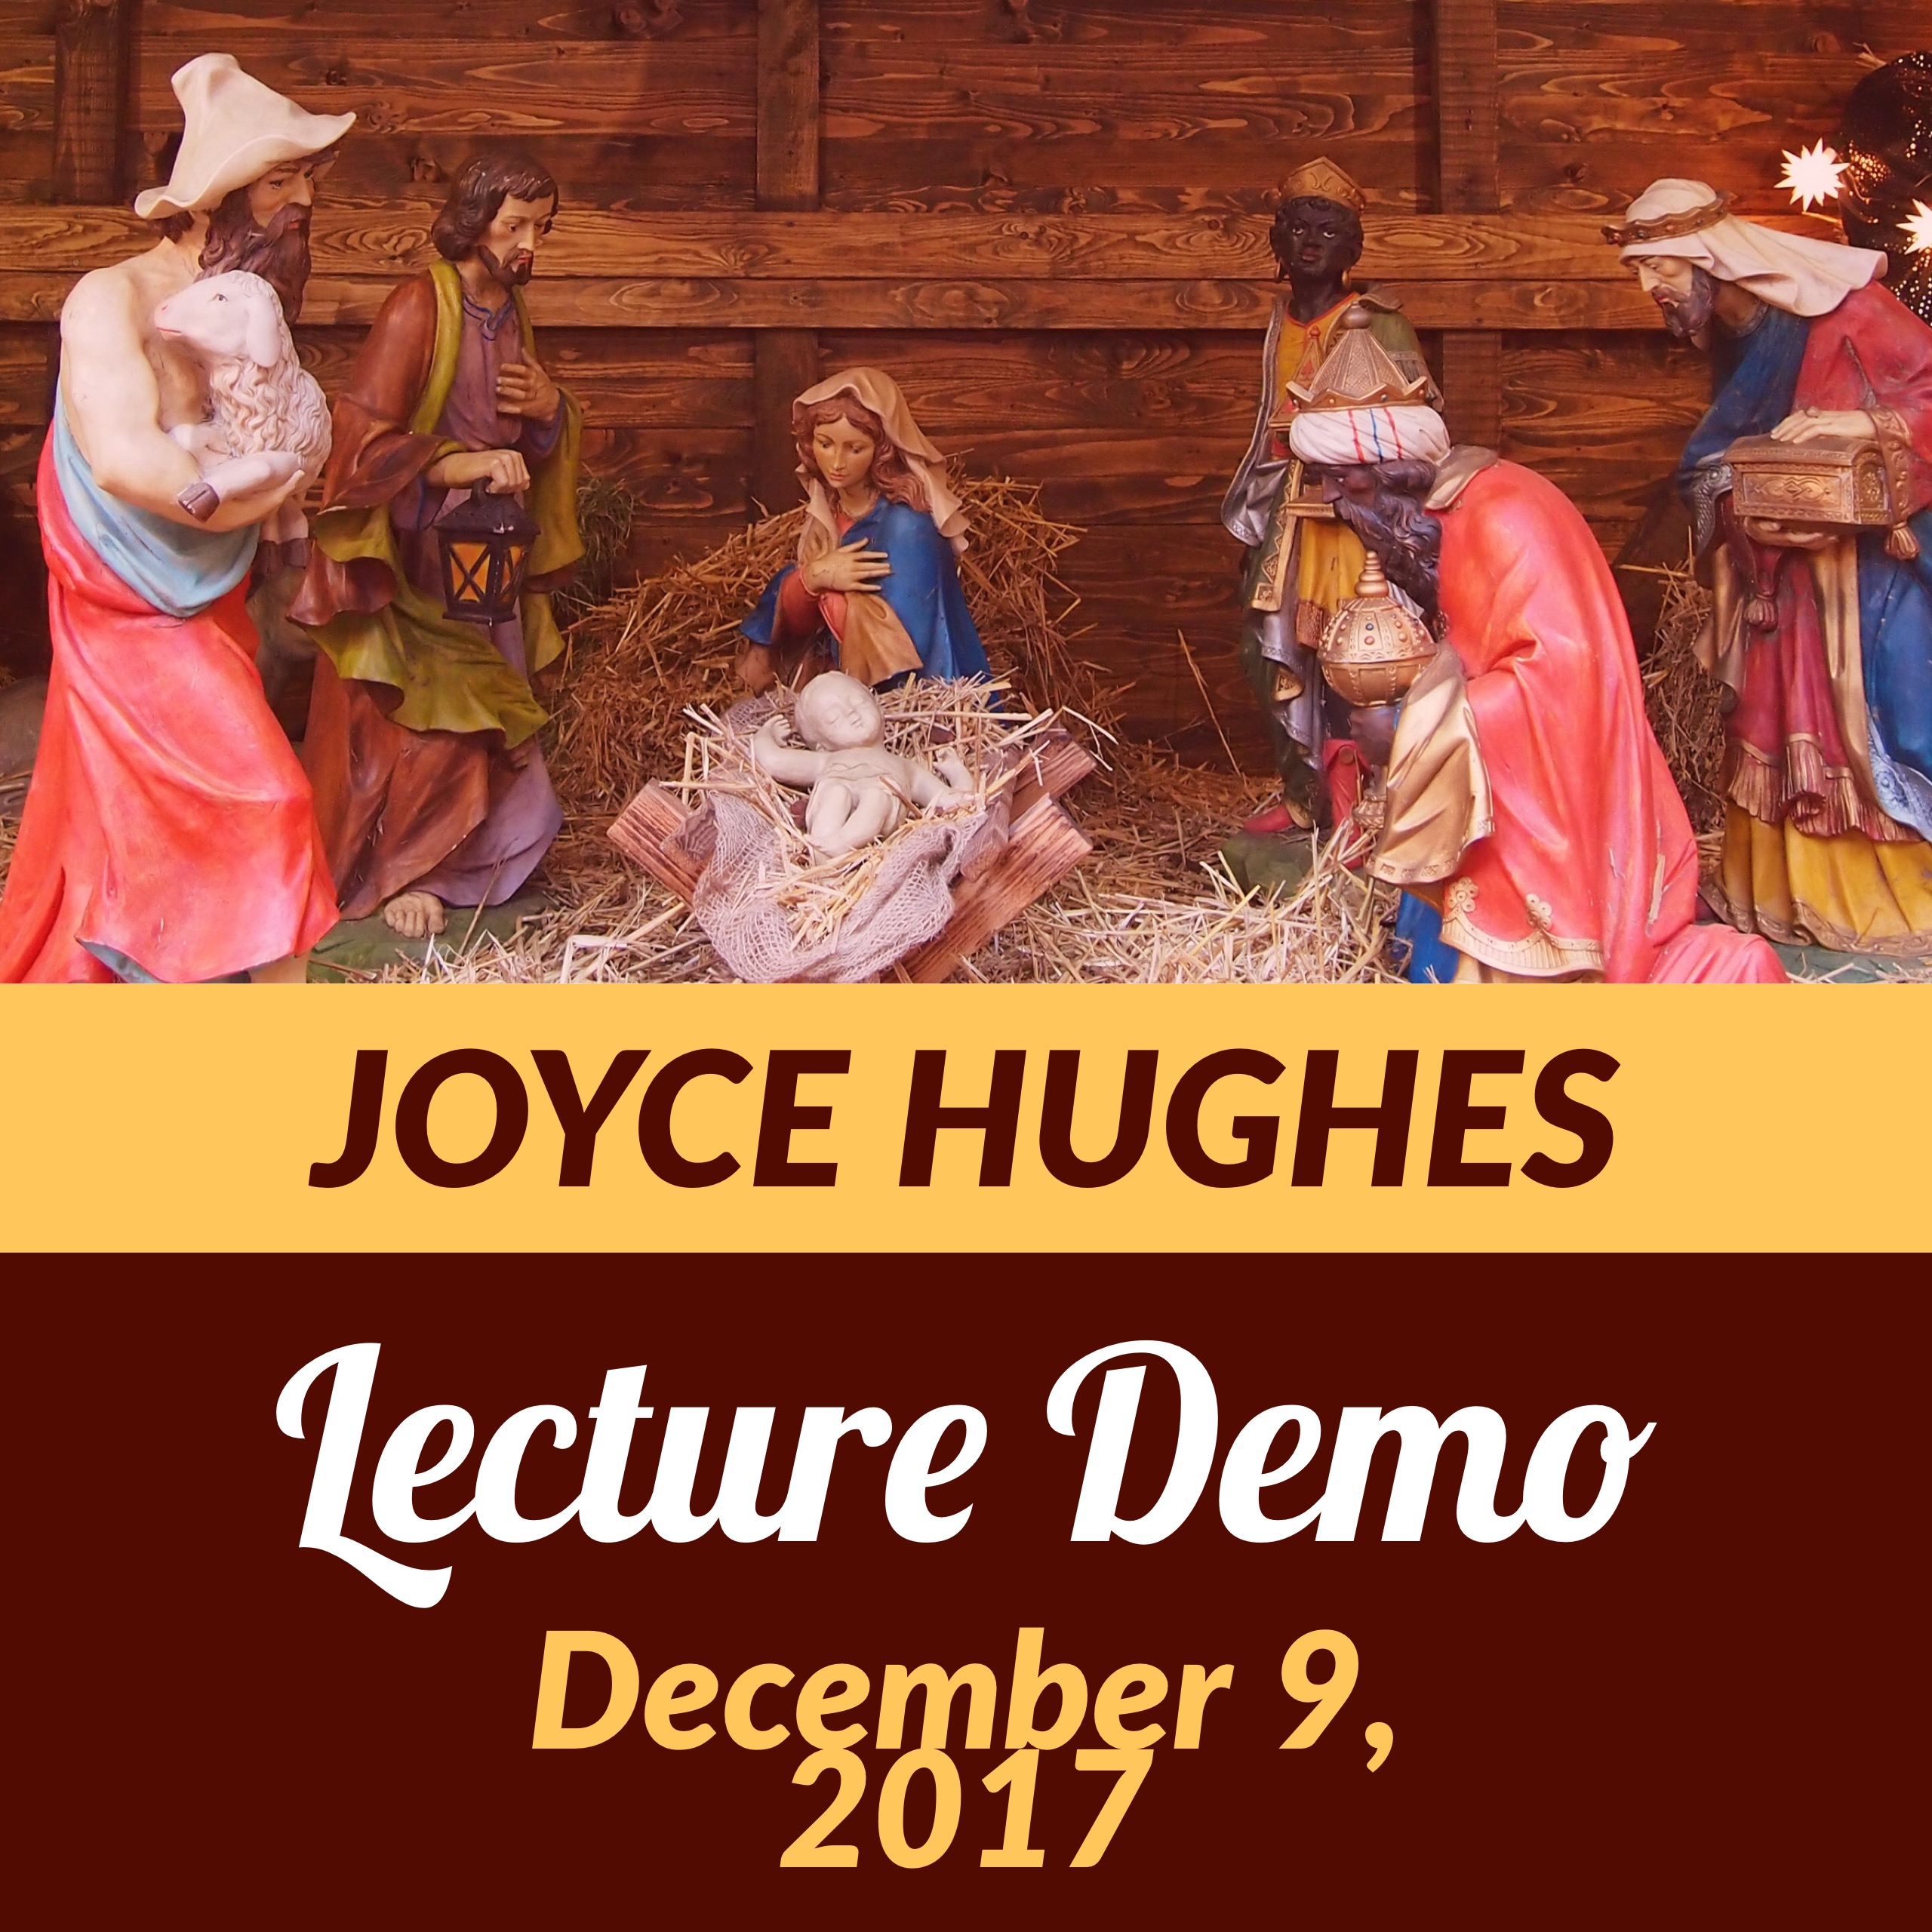 Joyce-Hughes-Lecture-Demo